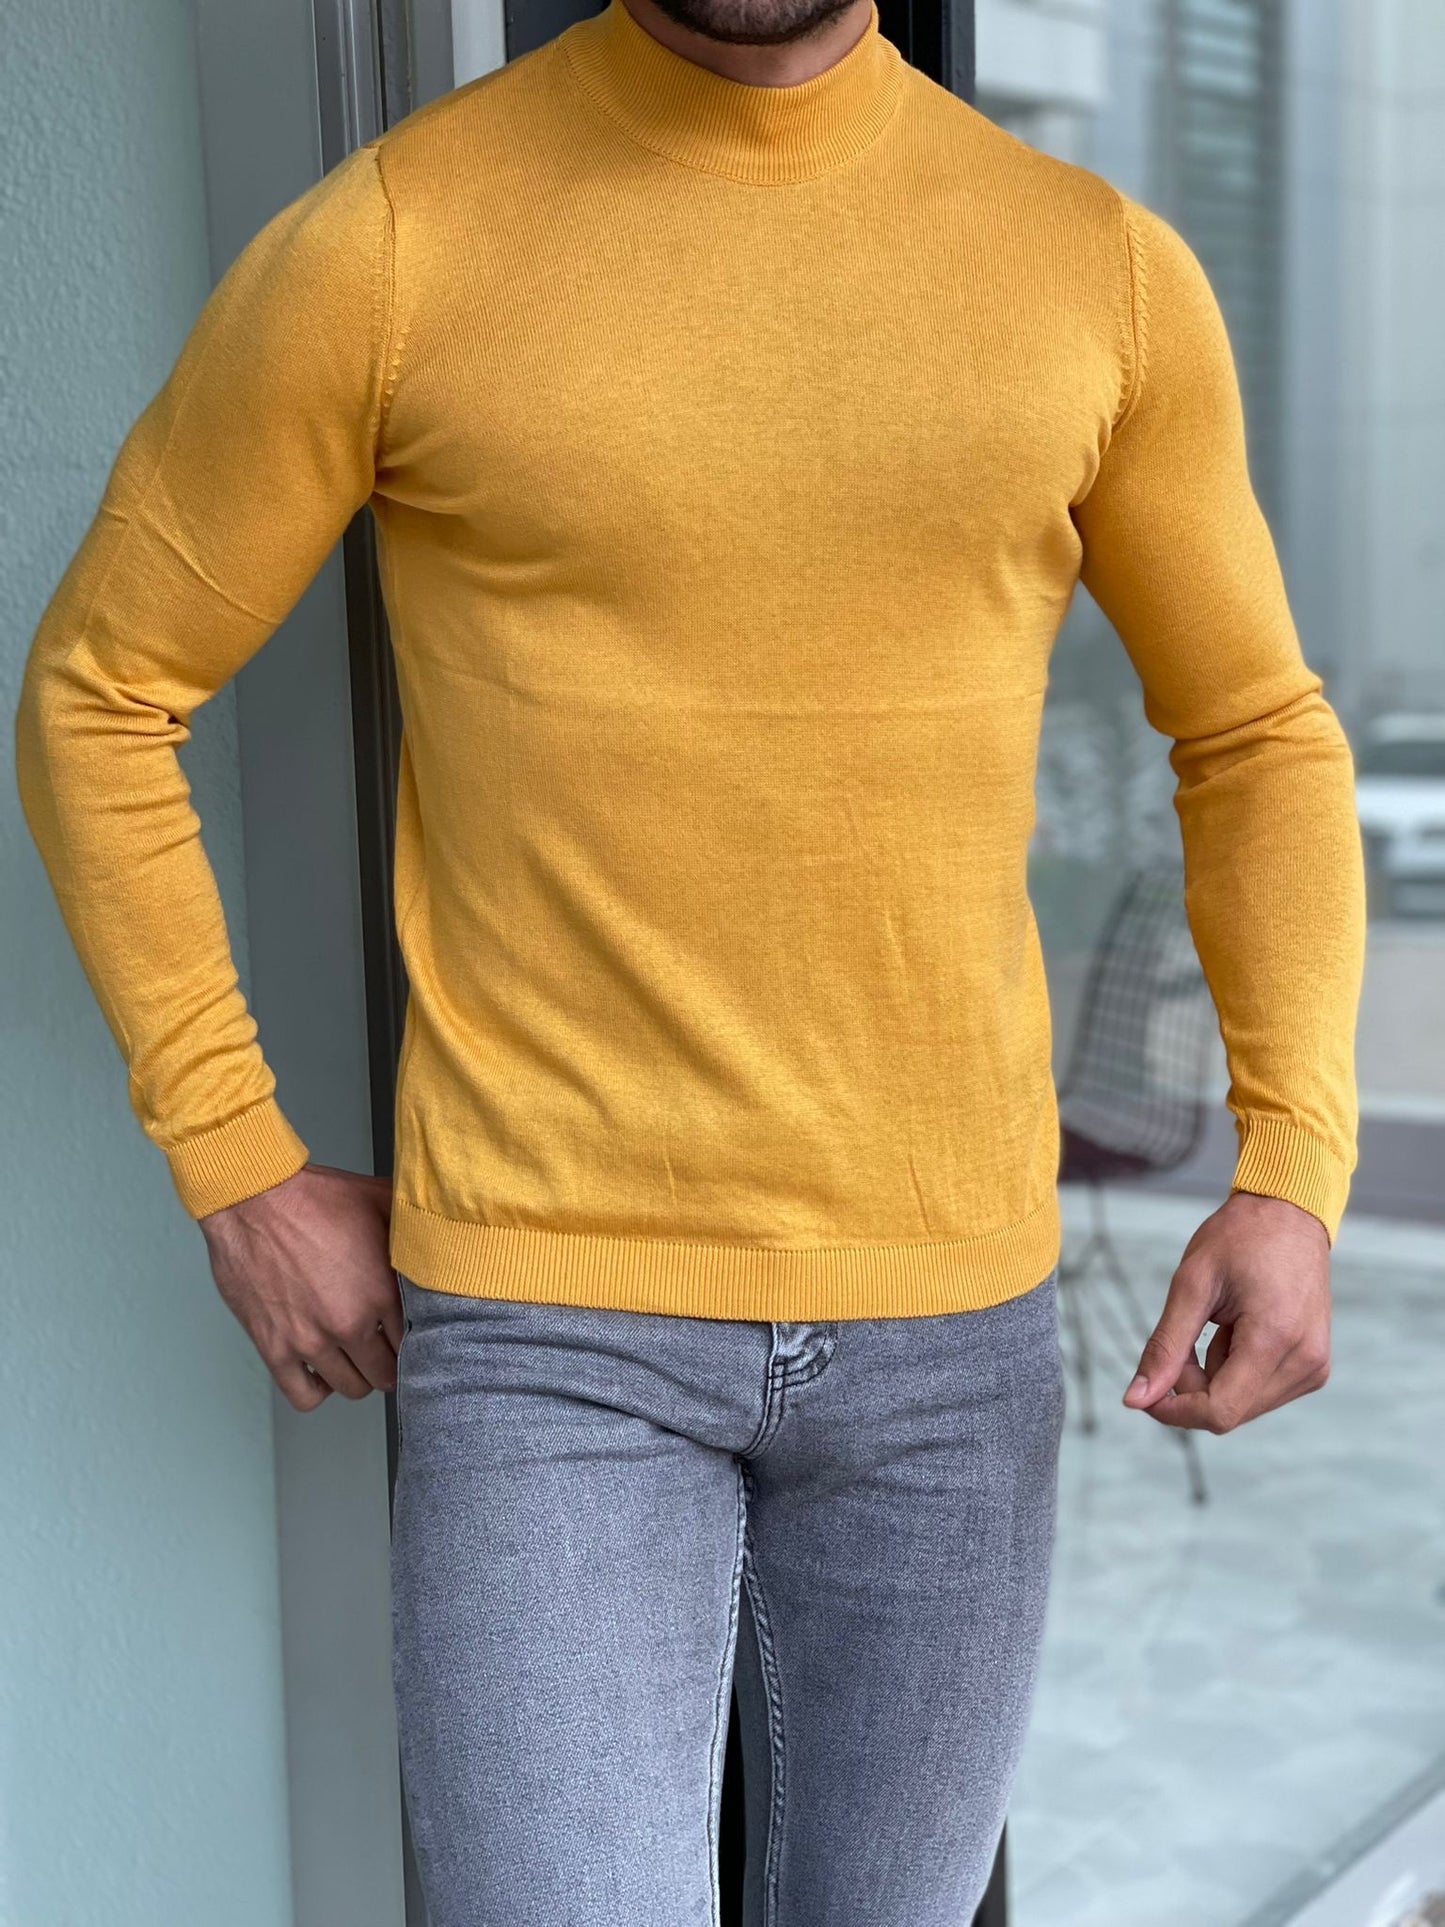 Capel Yellow Slim Fit Mock Turtleneck Sweater